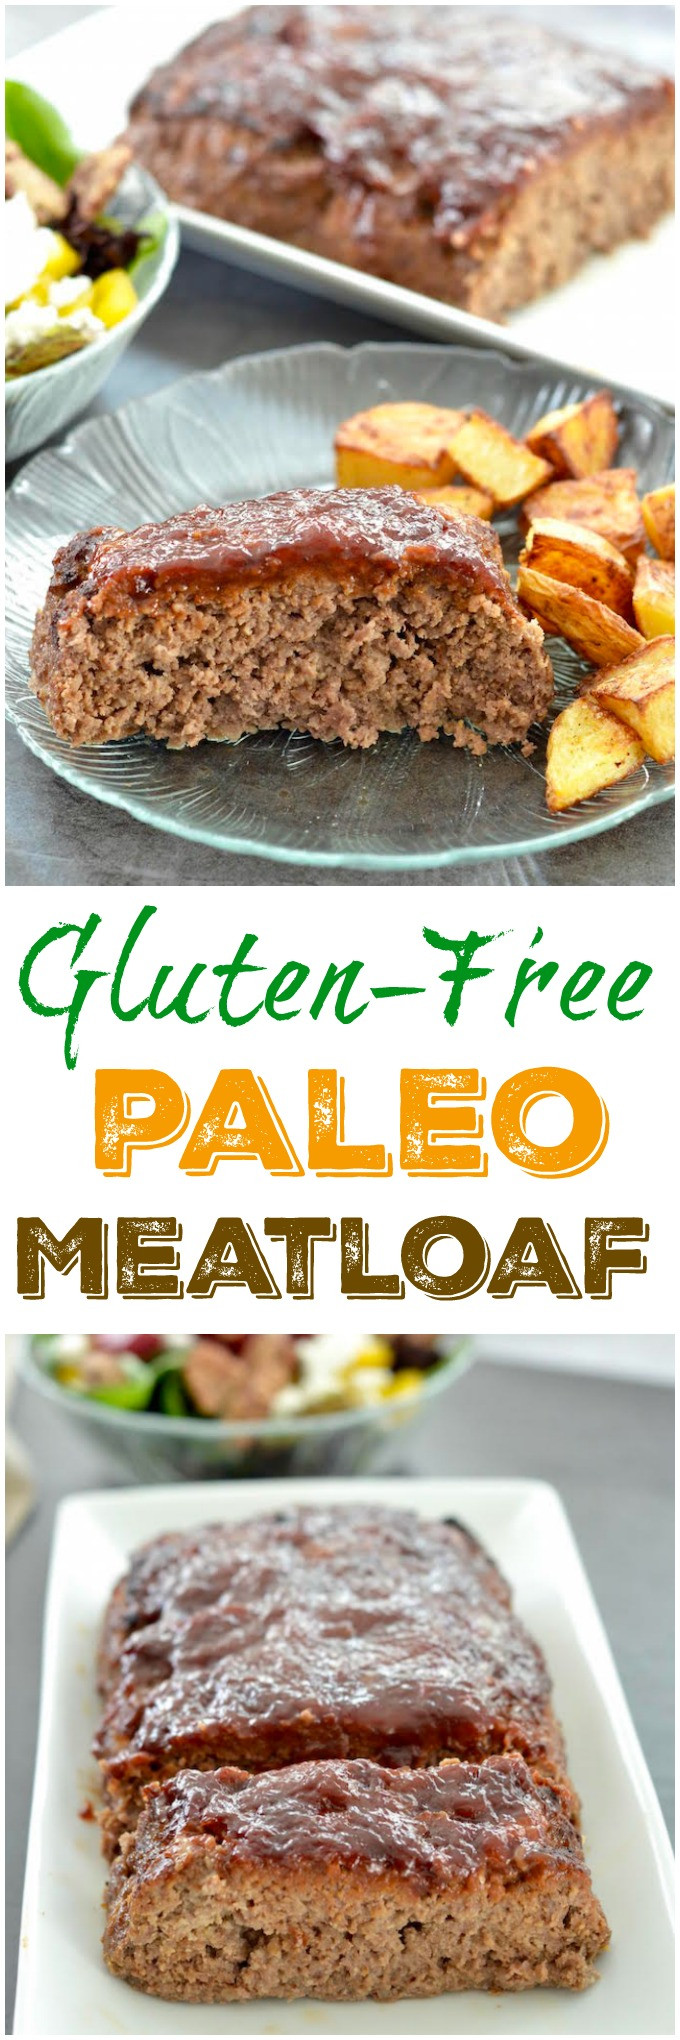 Dairy Free Meatloaf
 Gluten Free Paleo Meatloaf